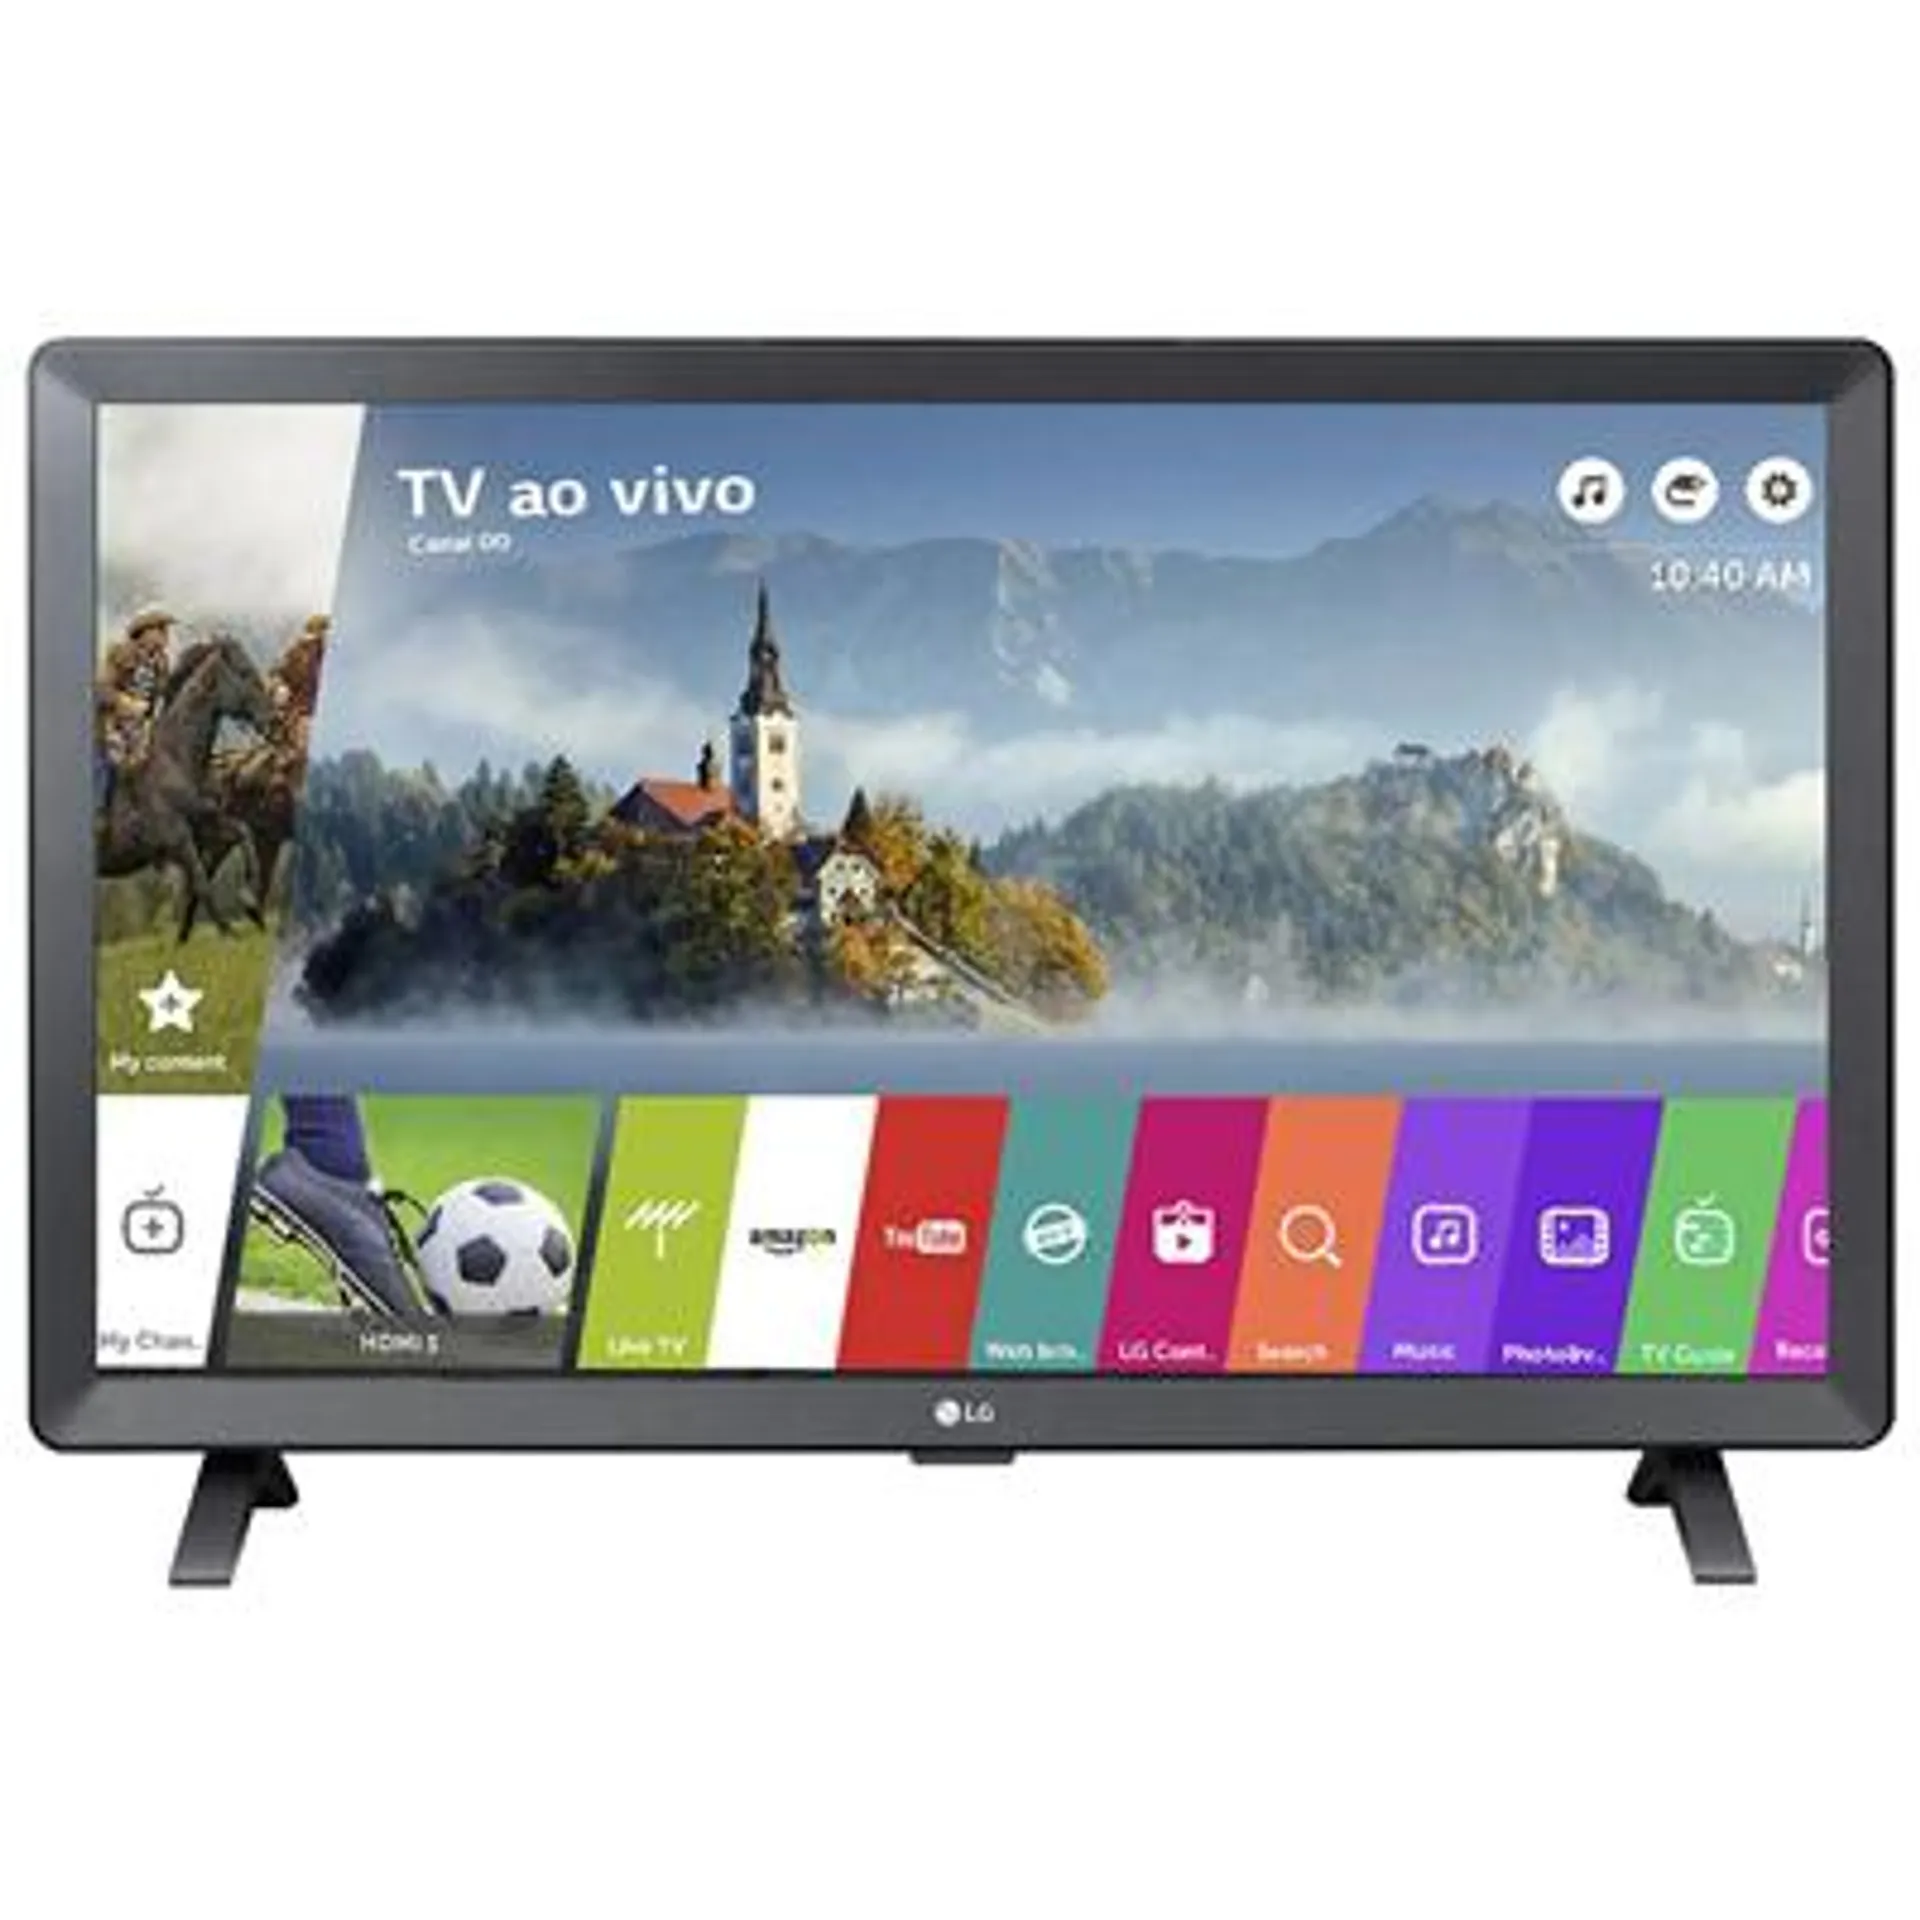 Smart TV Monitor LG 24" LED HD Conversor Digital Integrado Smart WebOS 3.5 - 24TL520S